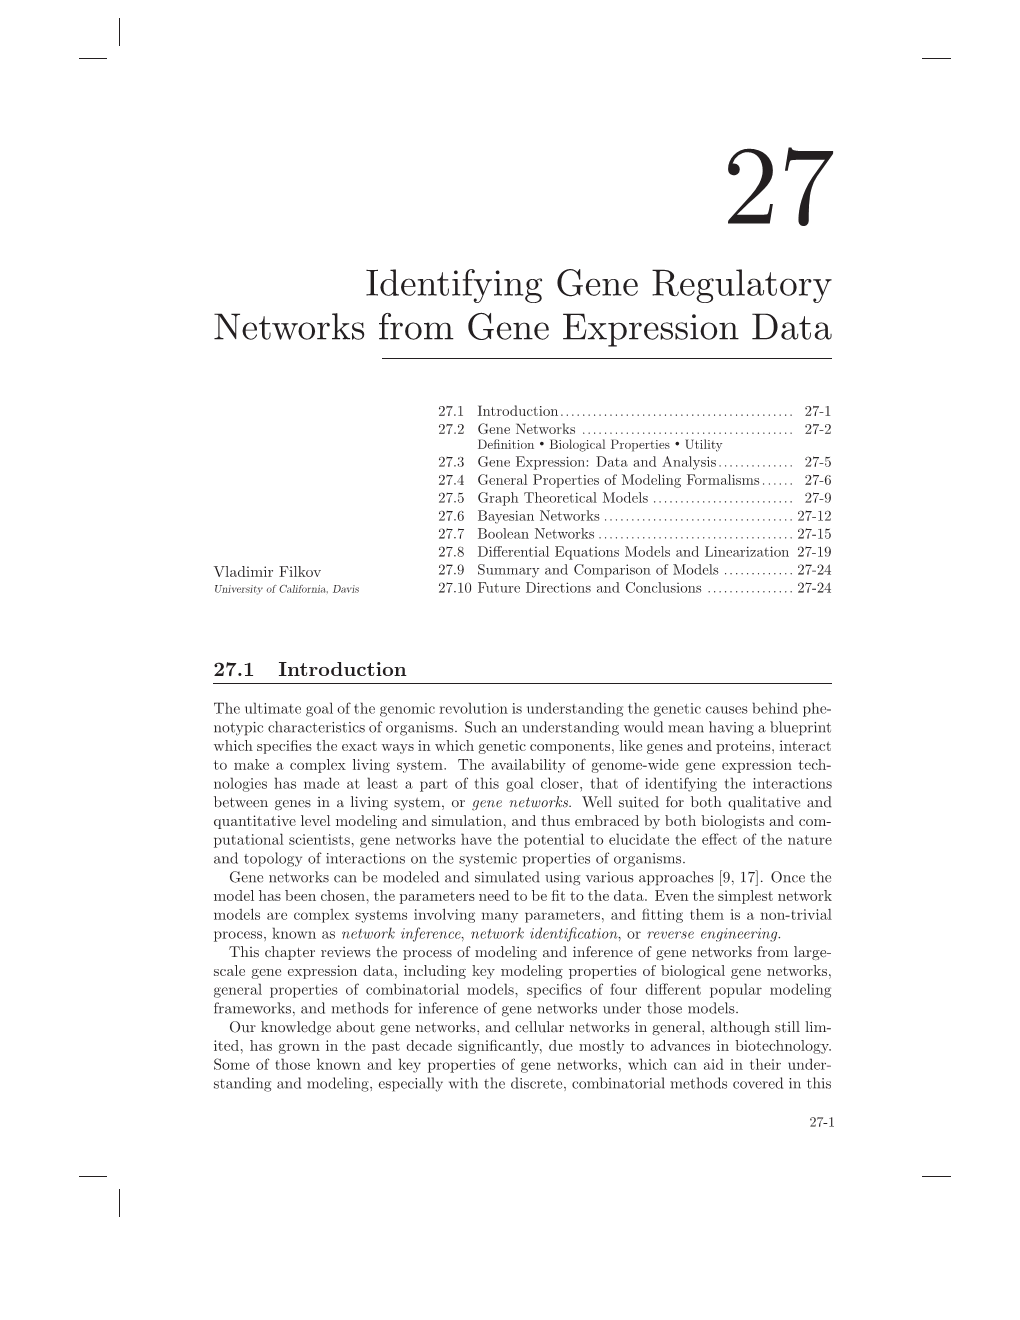 Identifying Gene Regulatory Networks from Gene Expression Data